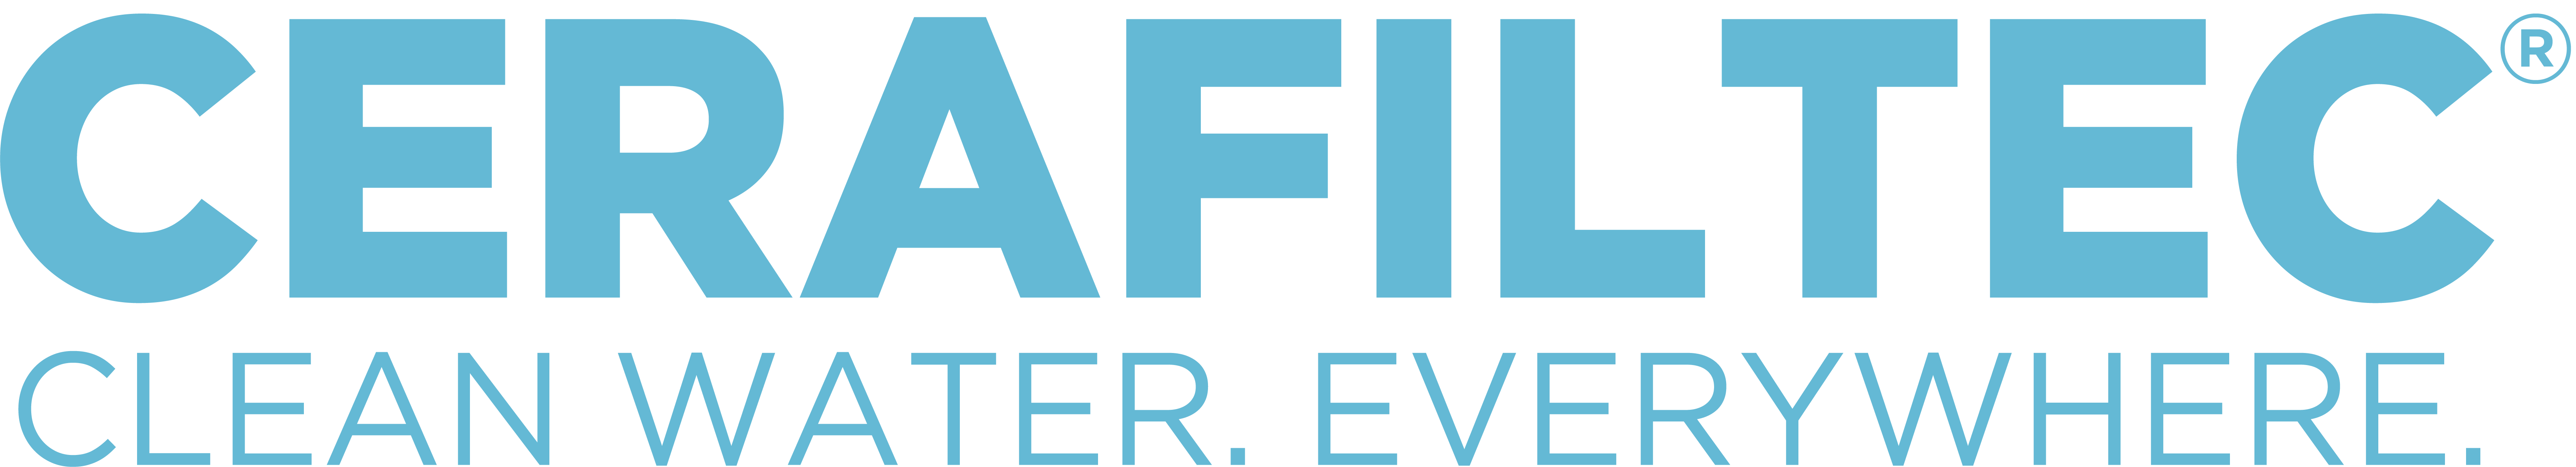 CERAFILTEC-Logo_2019_blau-transparent (2)